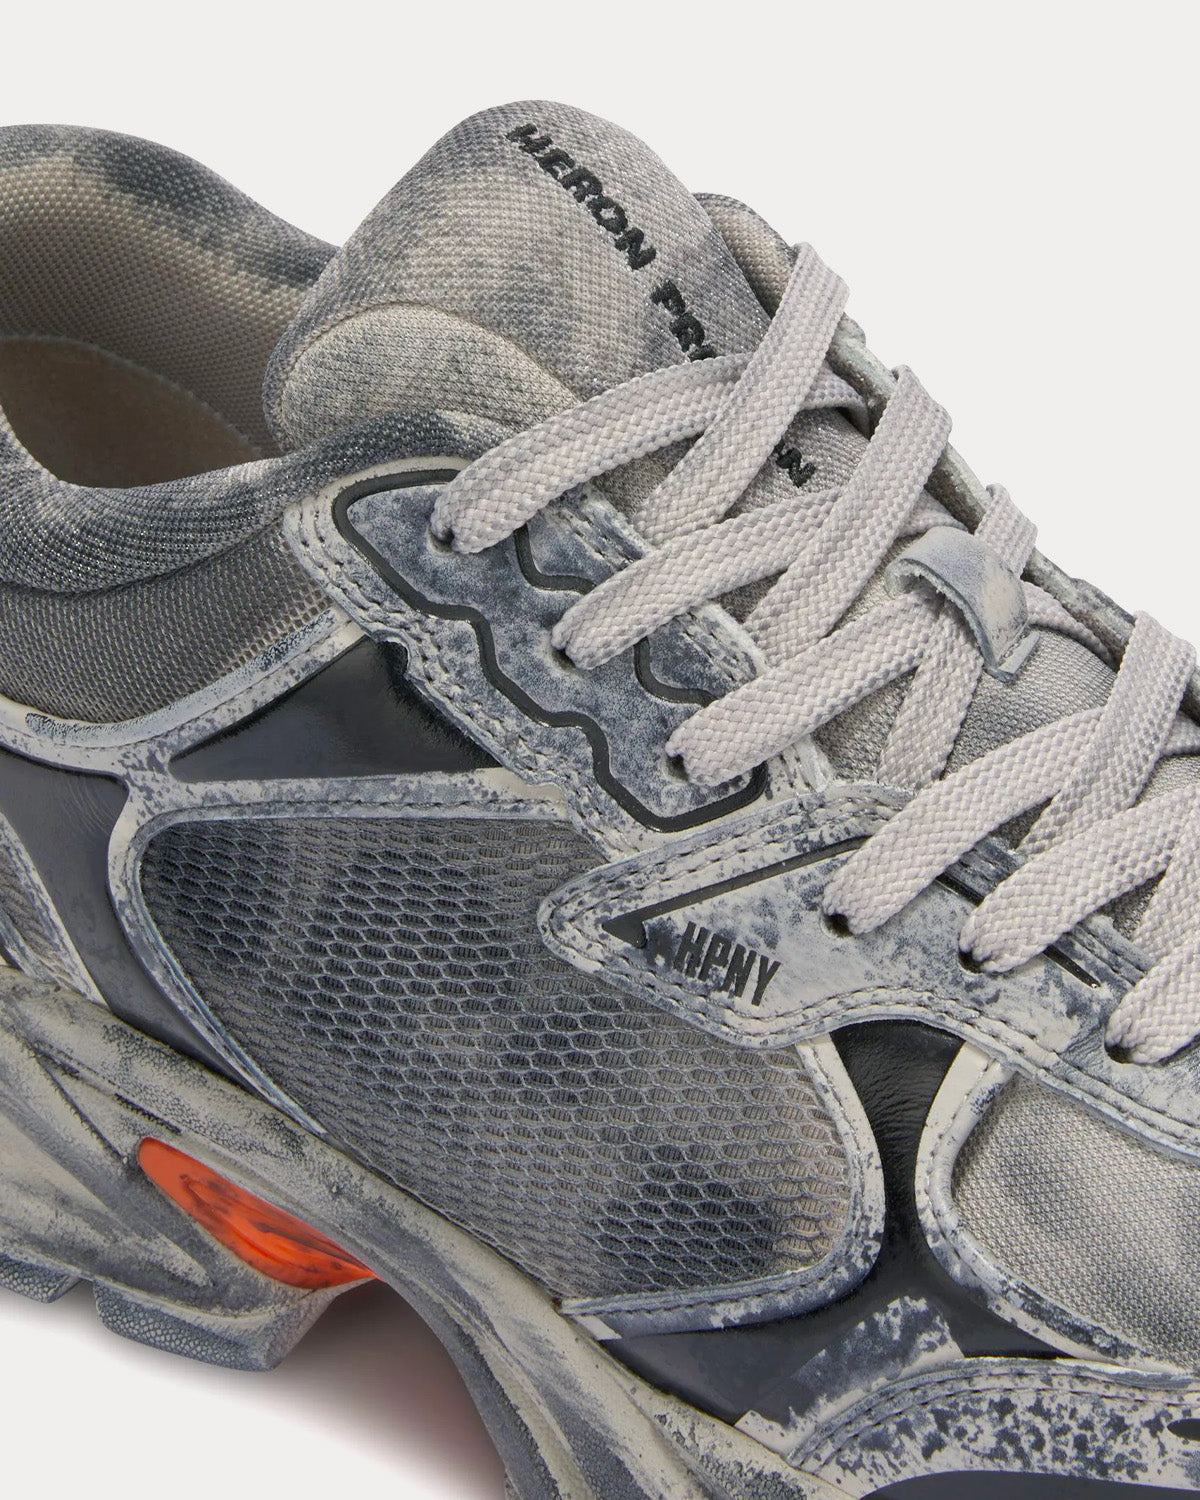 Heron Preston - Block Stepper Worn Leather Dark Grey Low Top Sneakers